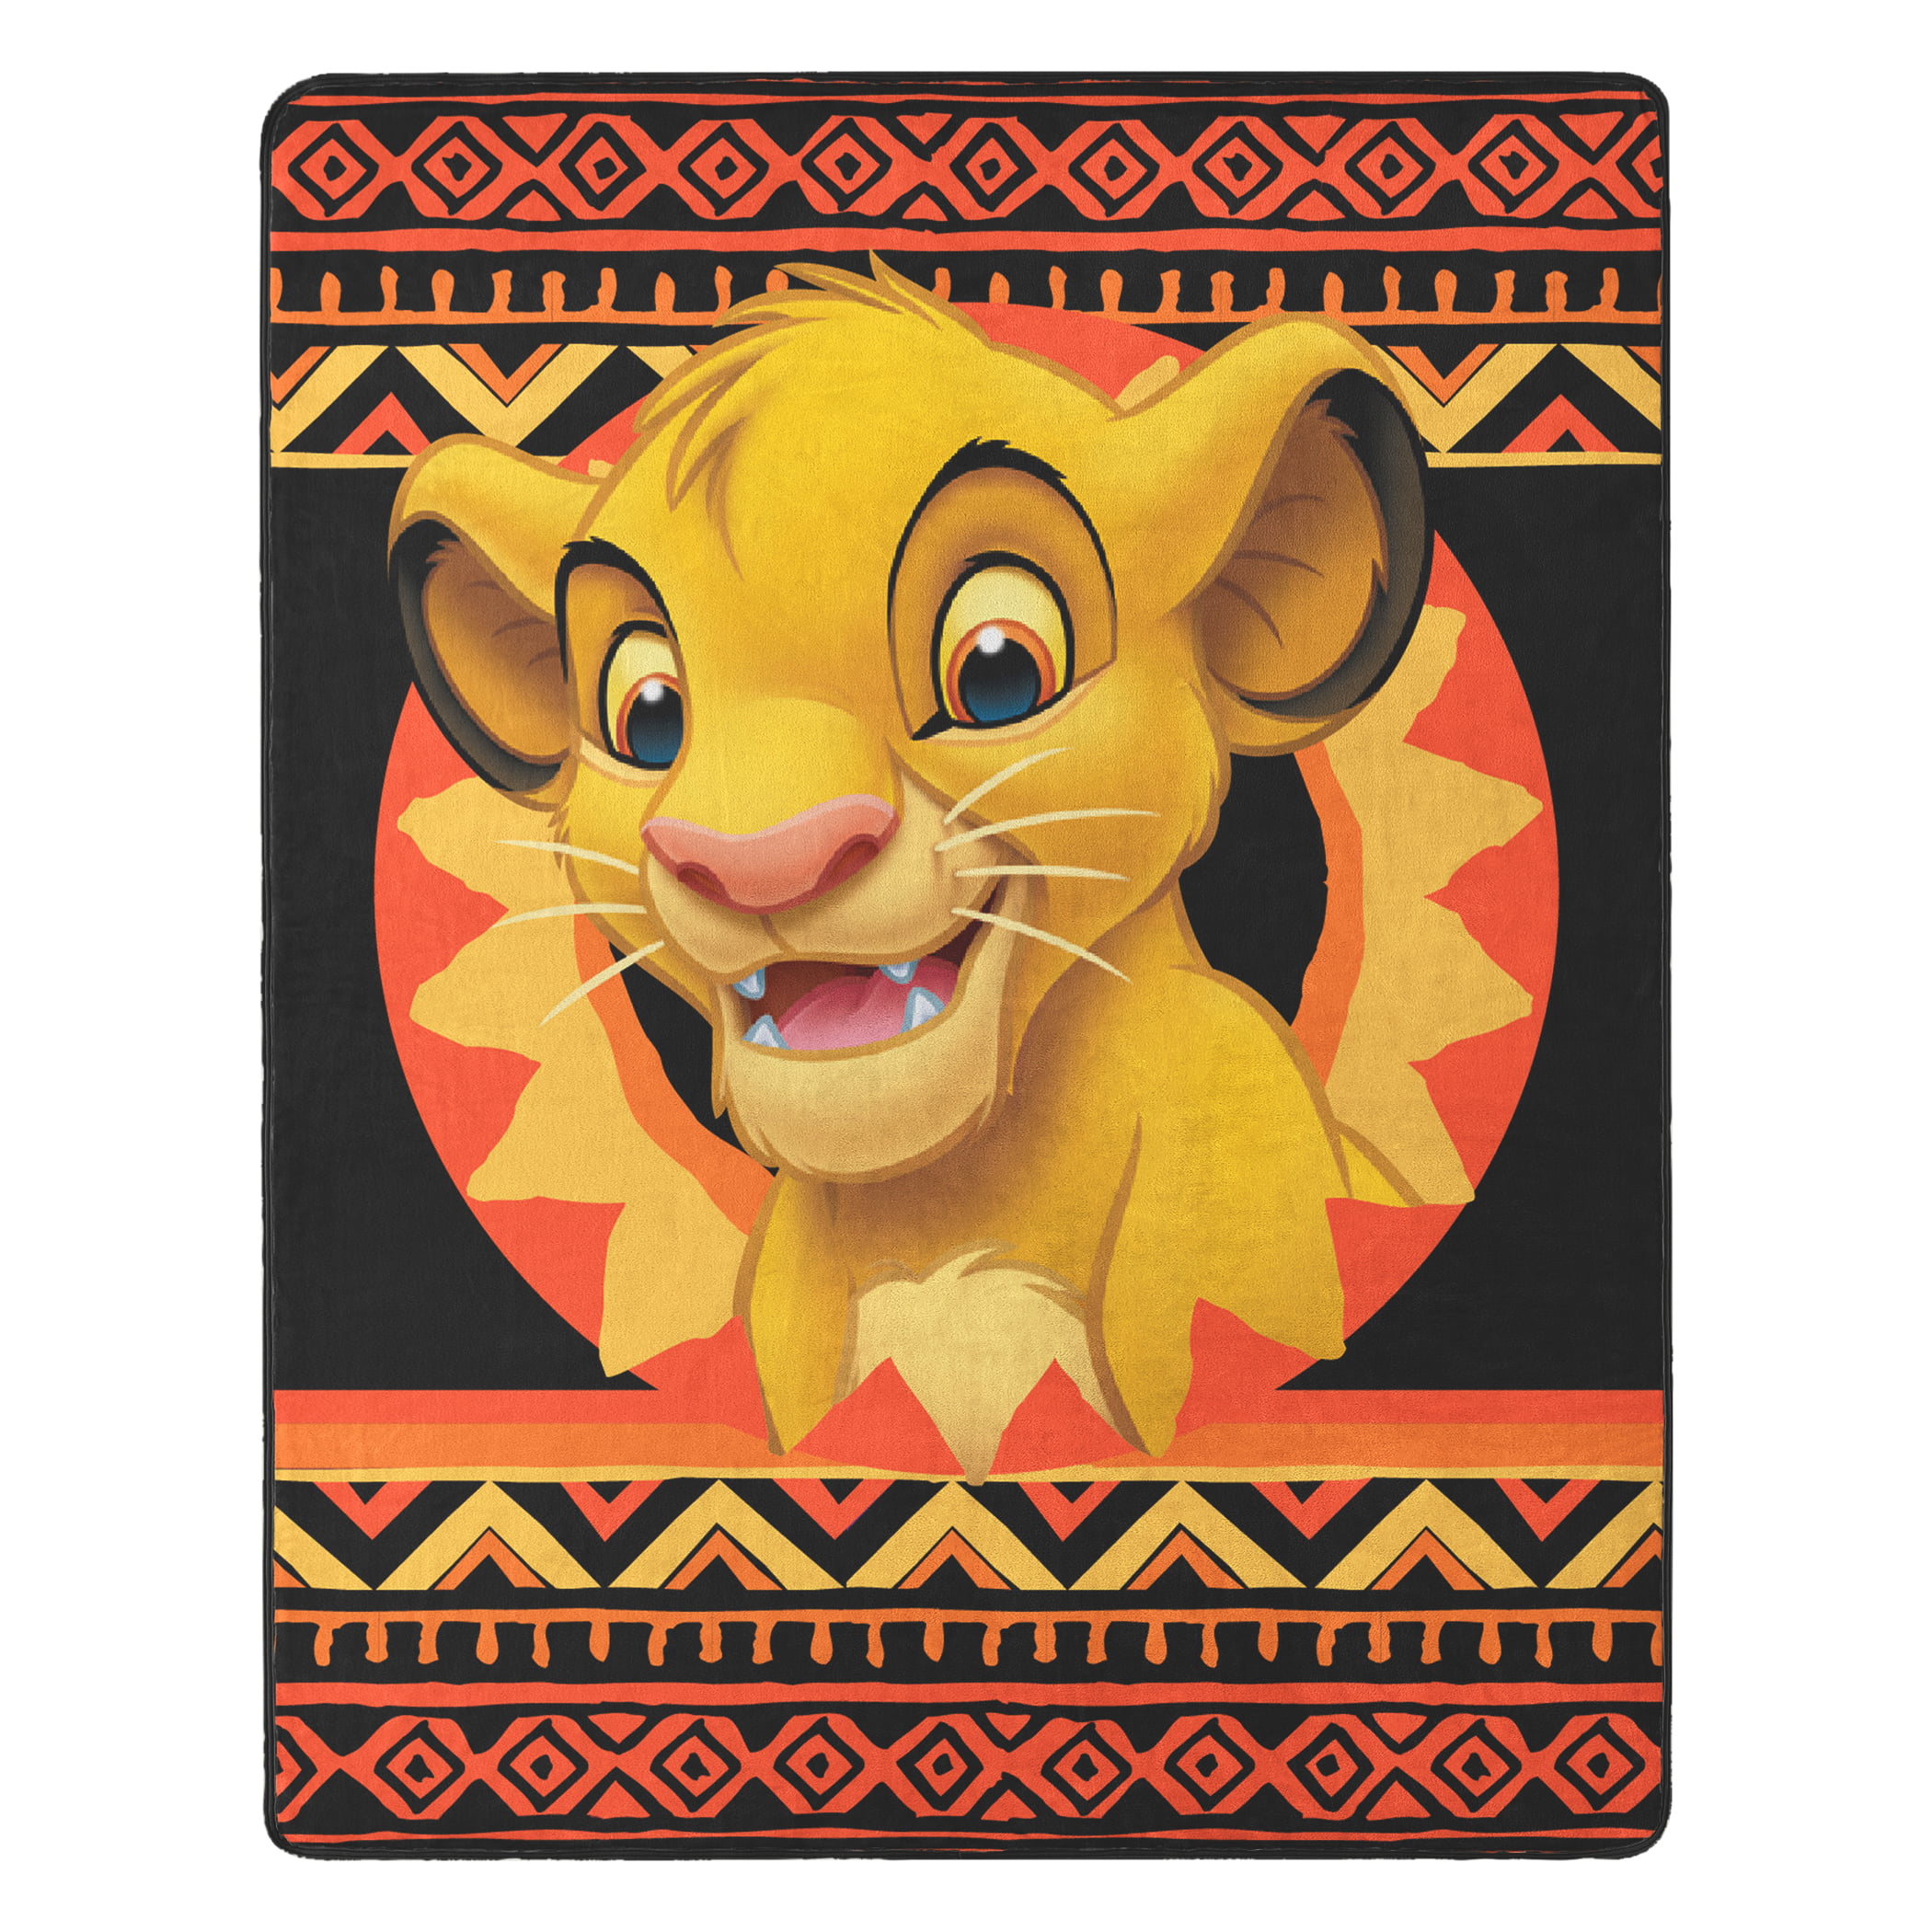 Disney The Lion King Plush Throw Blanket 40 in x 50 in.